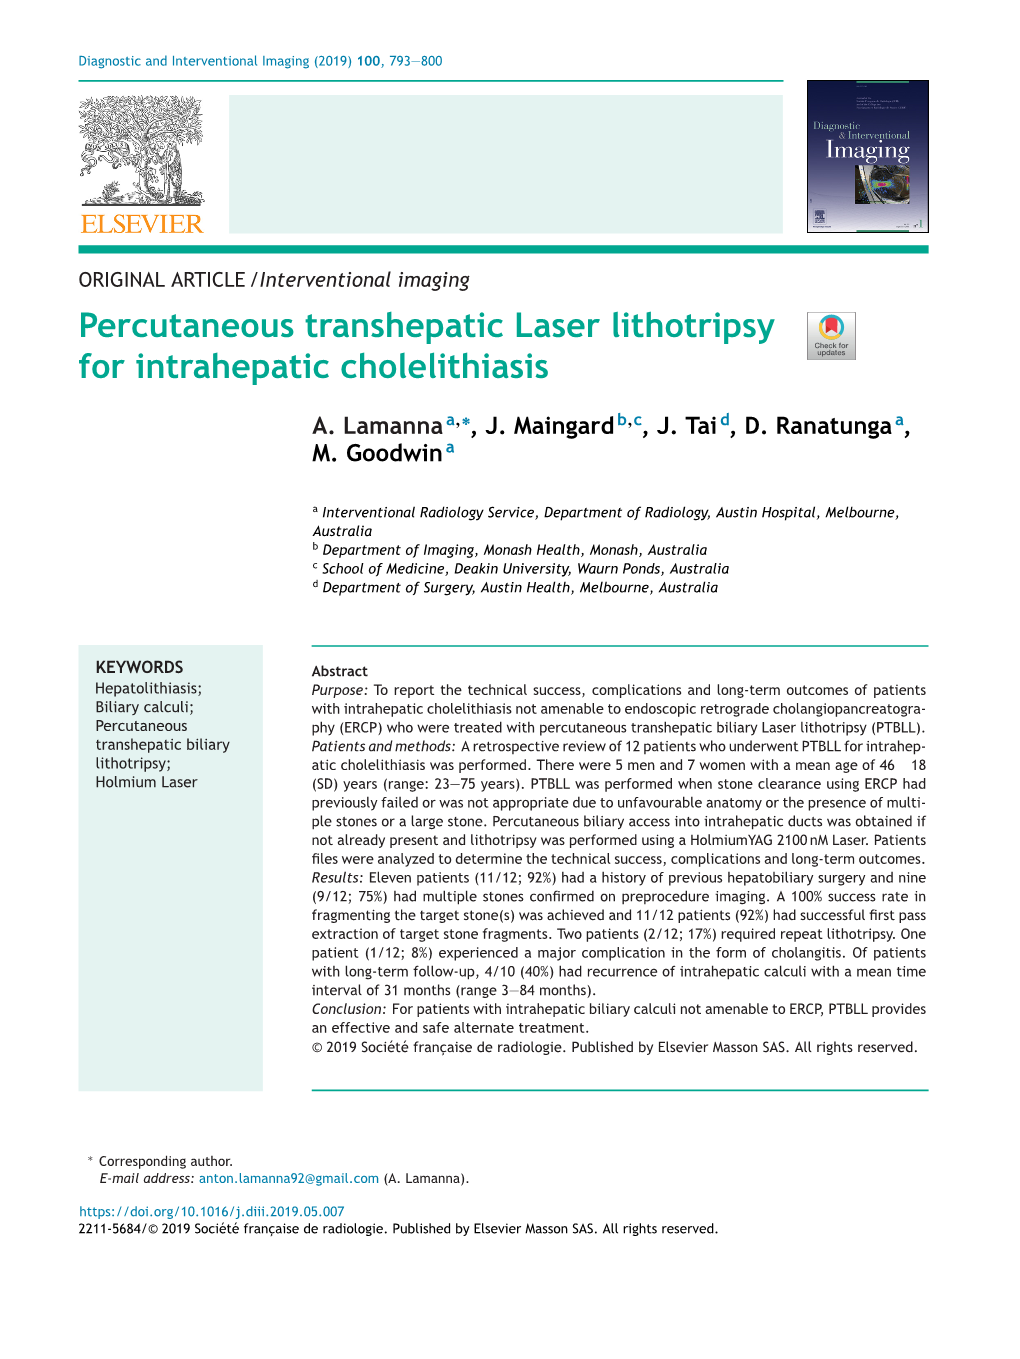 Percutaneous Transhepatic Laser Lithotripsy for Intrahepatic Cholelithiasis